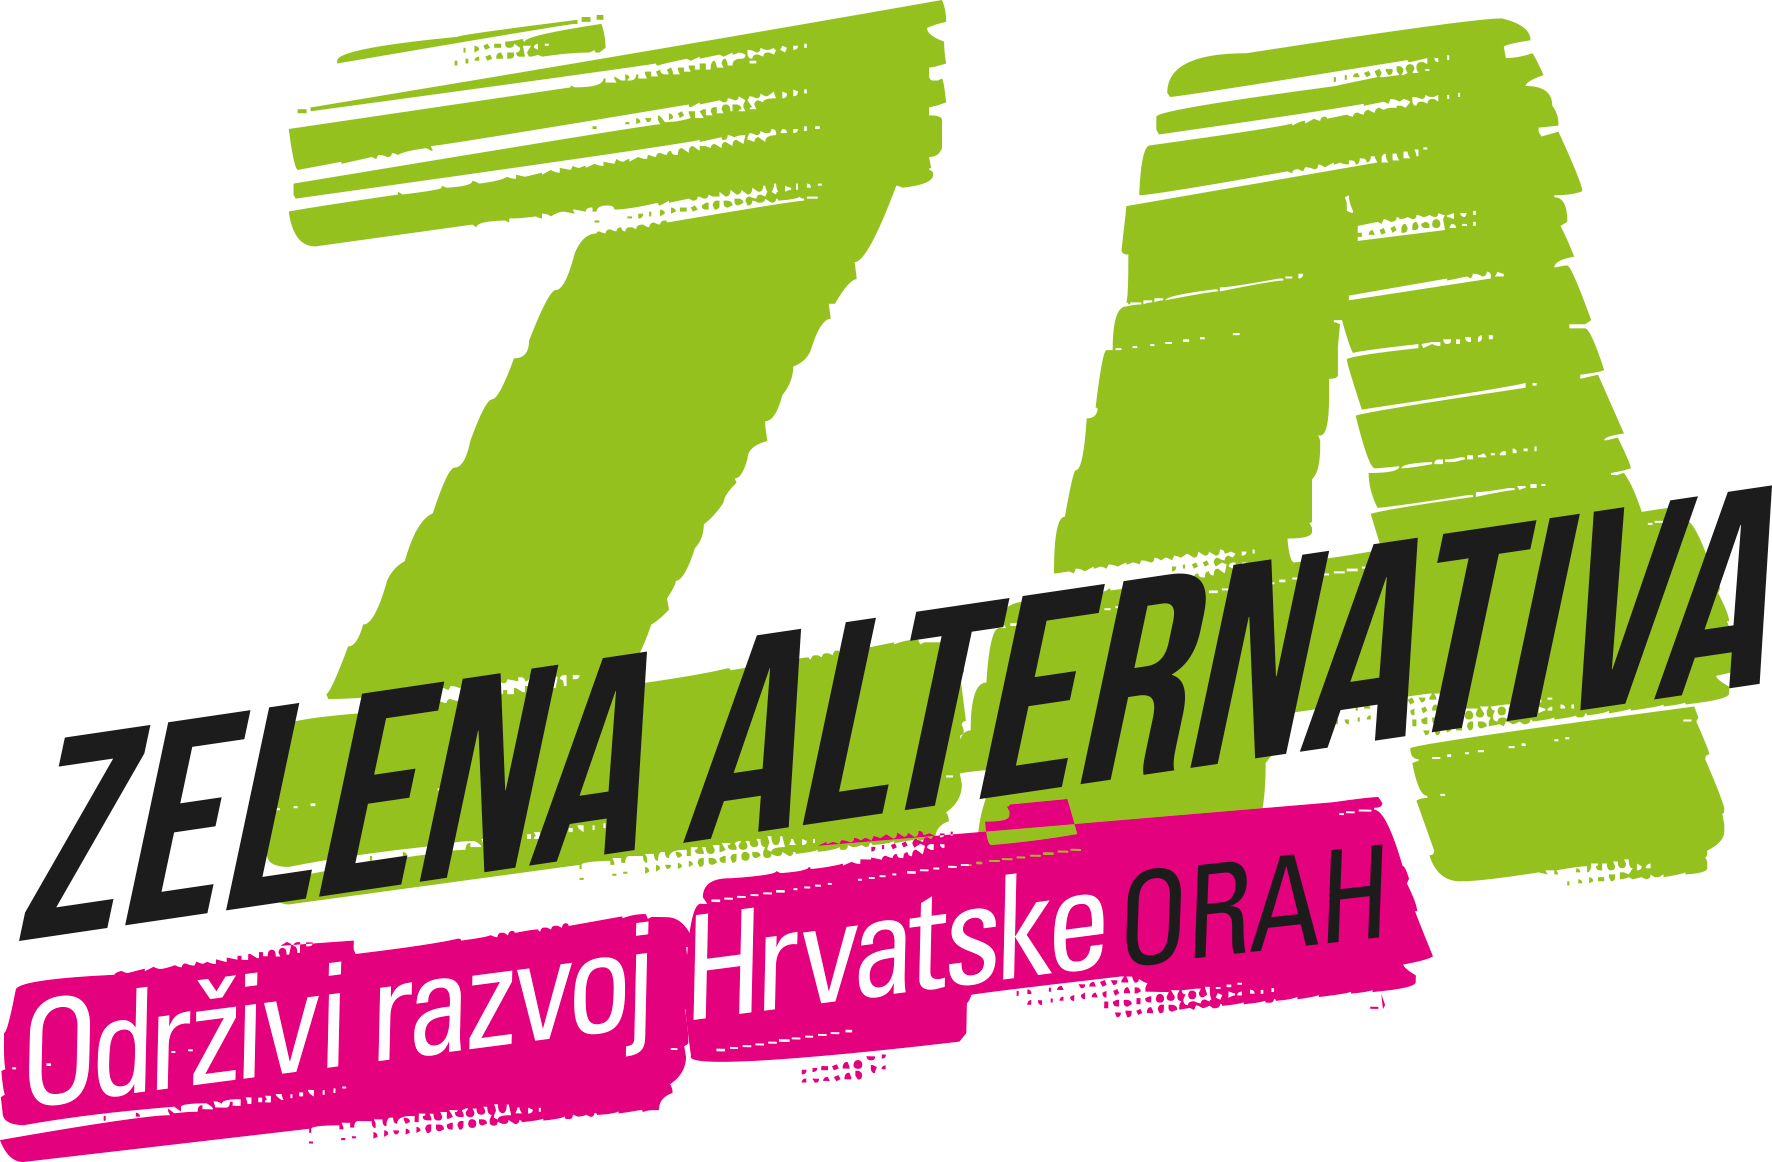 Zelena alternativa - ORaH